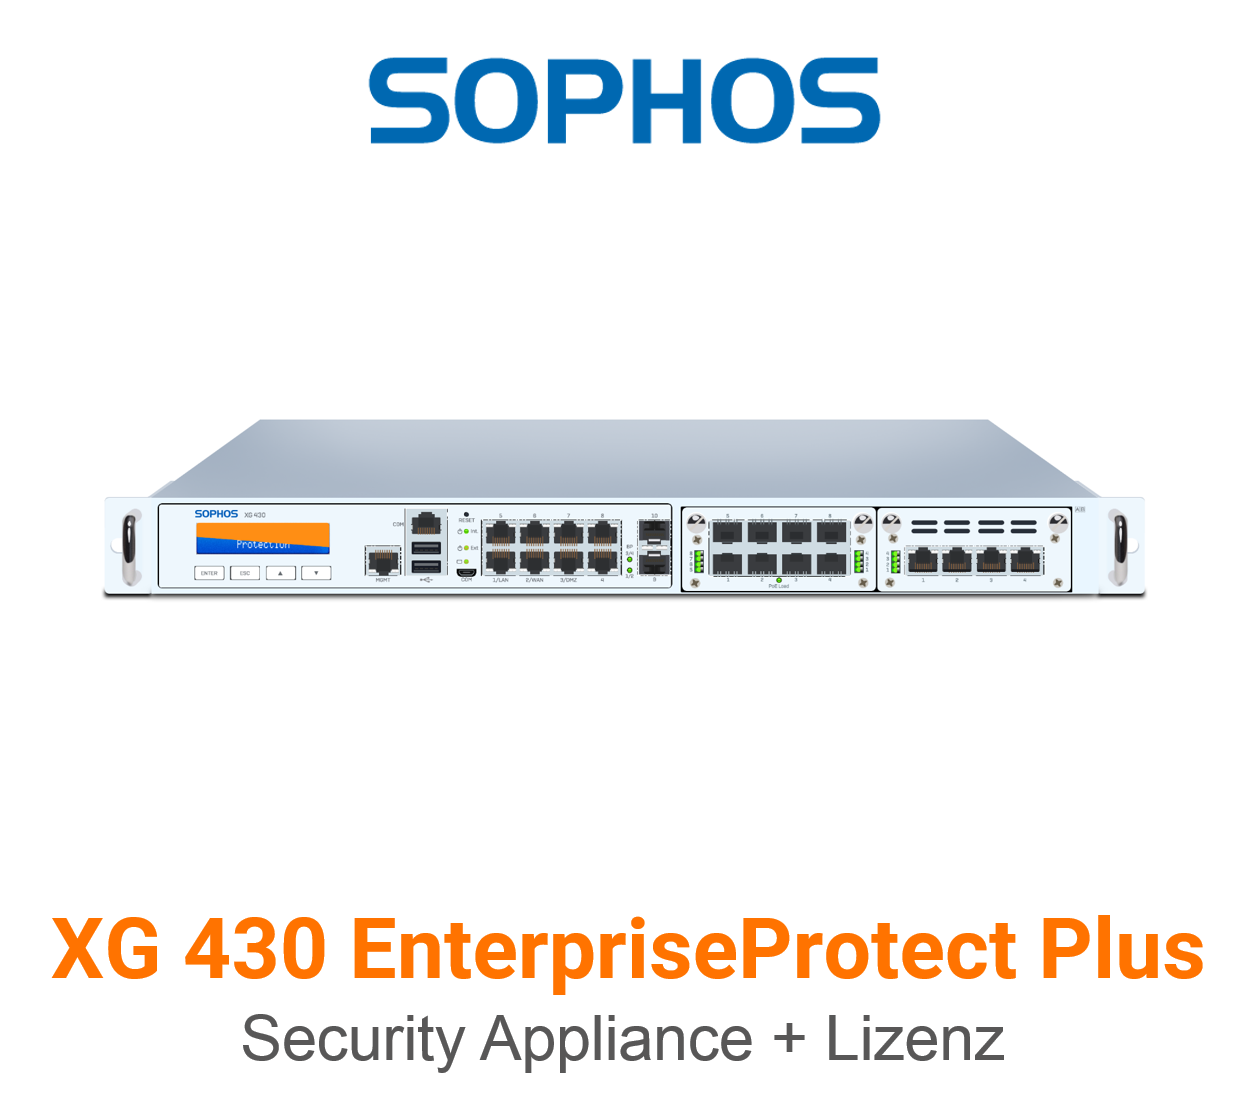 Sophos XG 430 EnterpriseProtect Plus Bundle (Hardware + Lizenz)